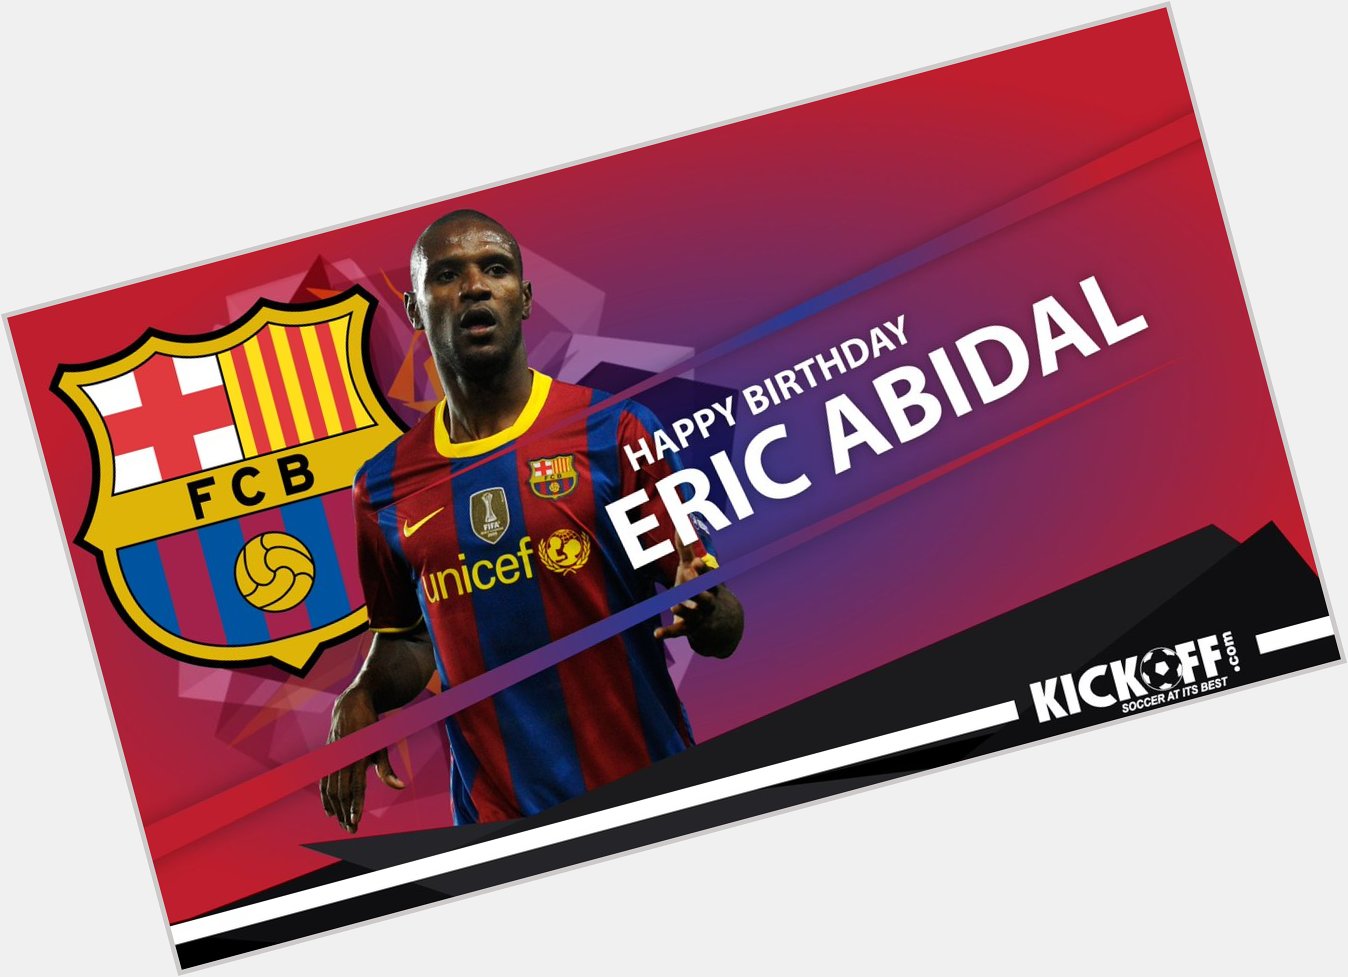 Happy Birthday to Barcelona legend Eric Abidal!
19 trophies Beat Cancer  Champion 